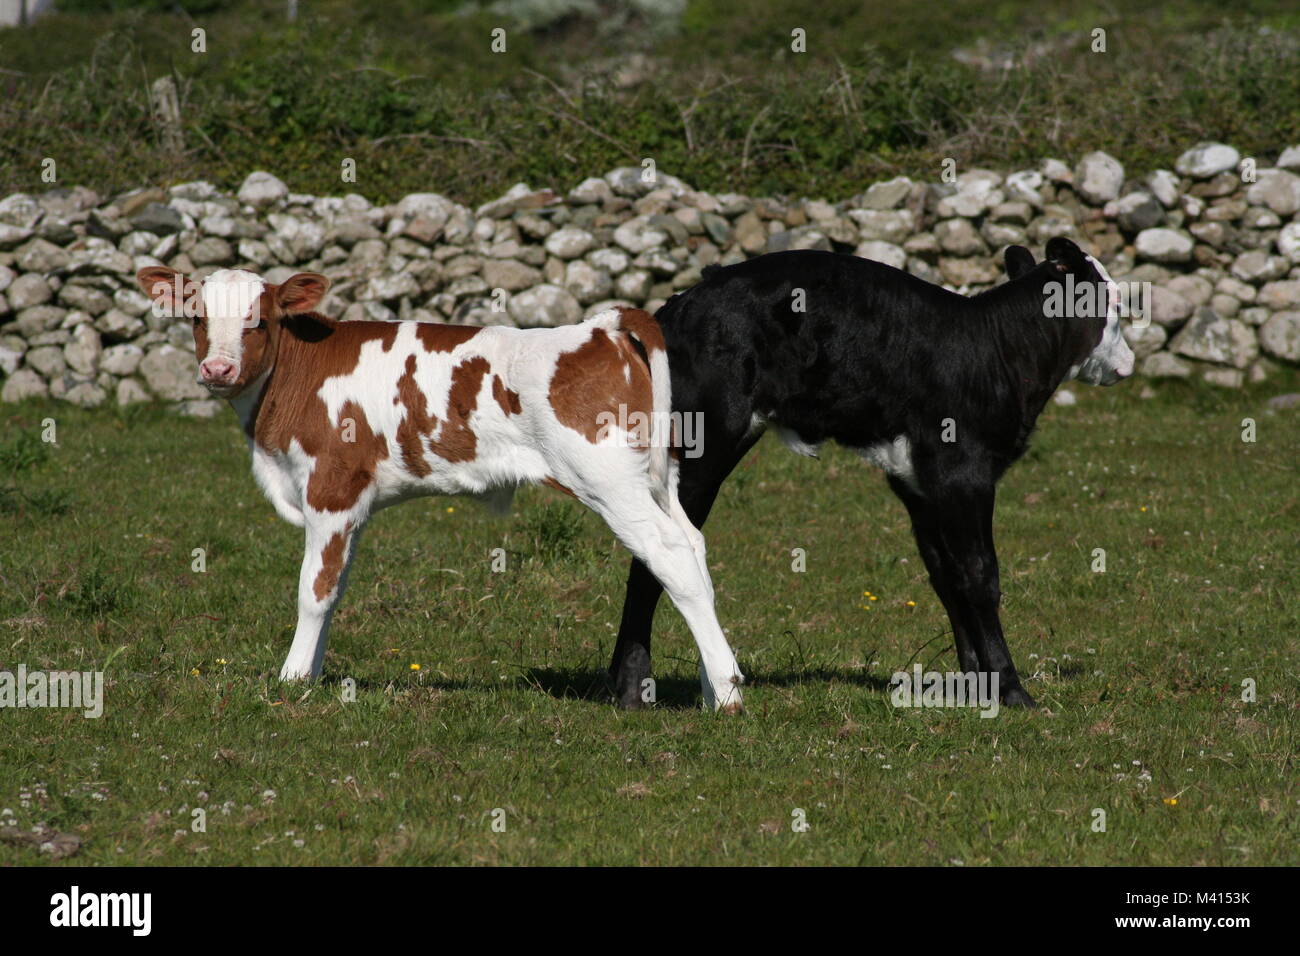 Pair of cute calves in field Stock Photo